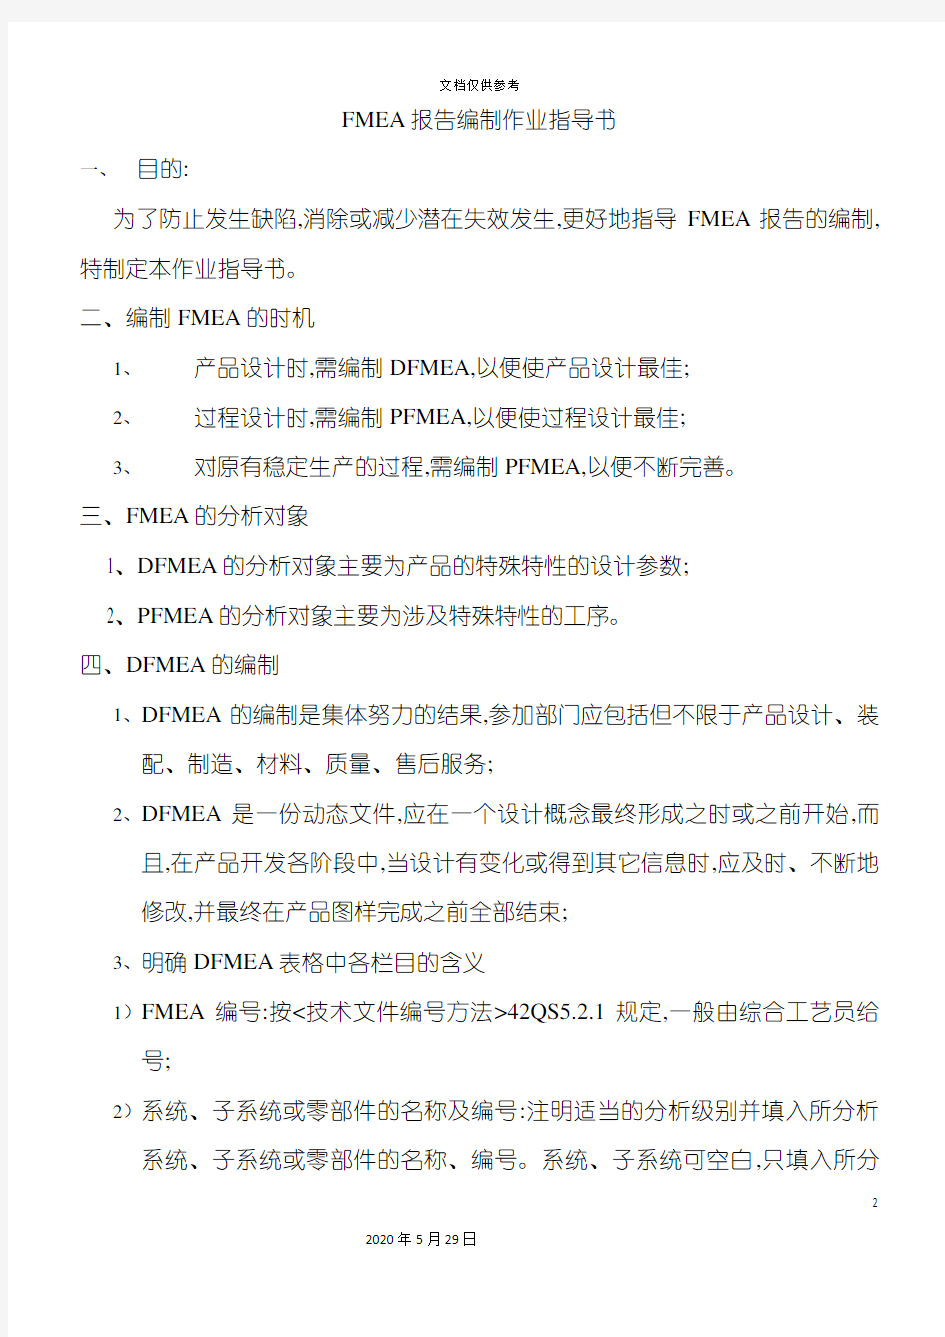 FMEA报告编制作业指导书